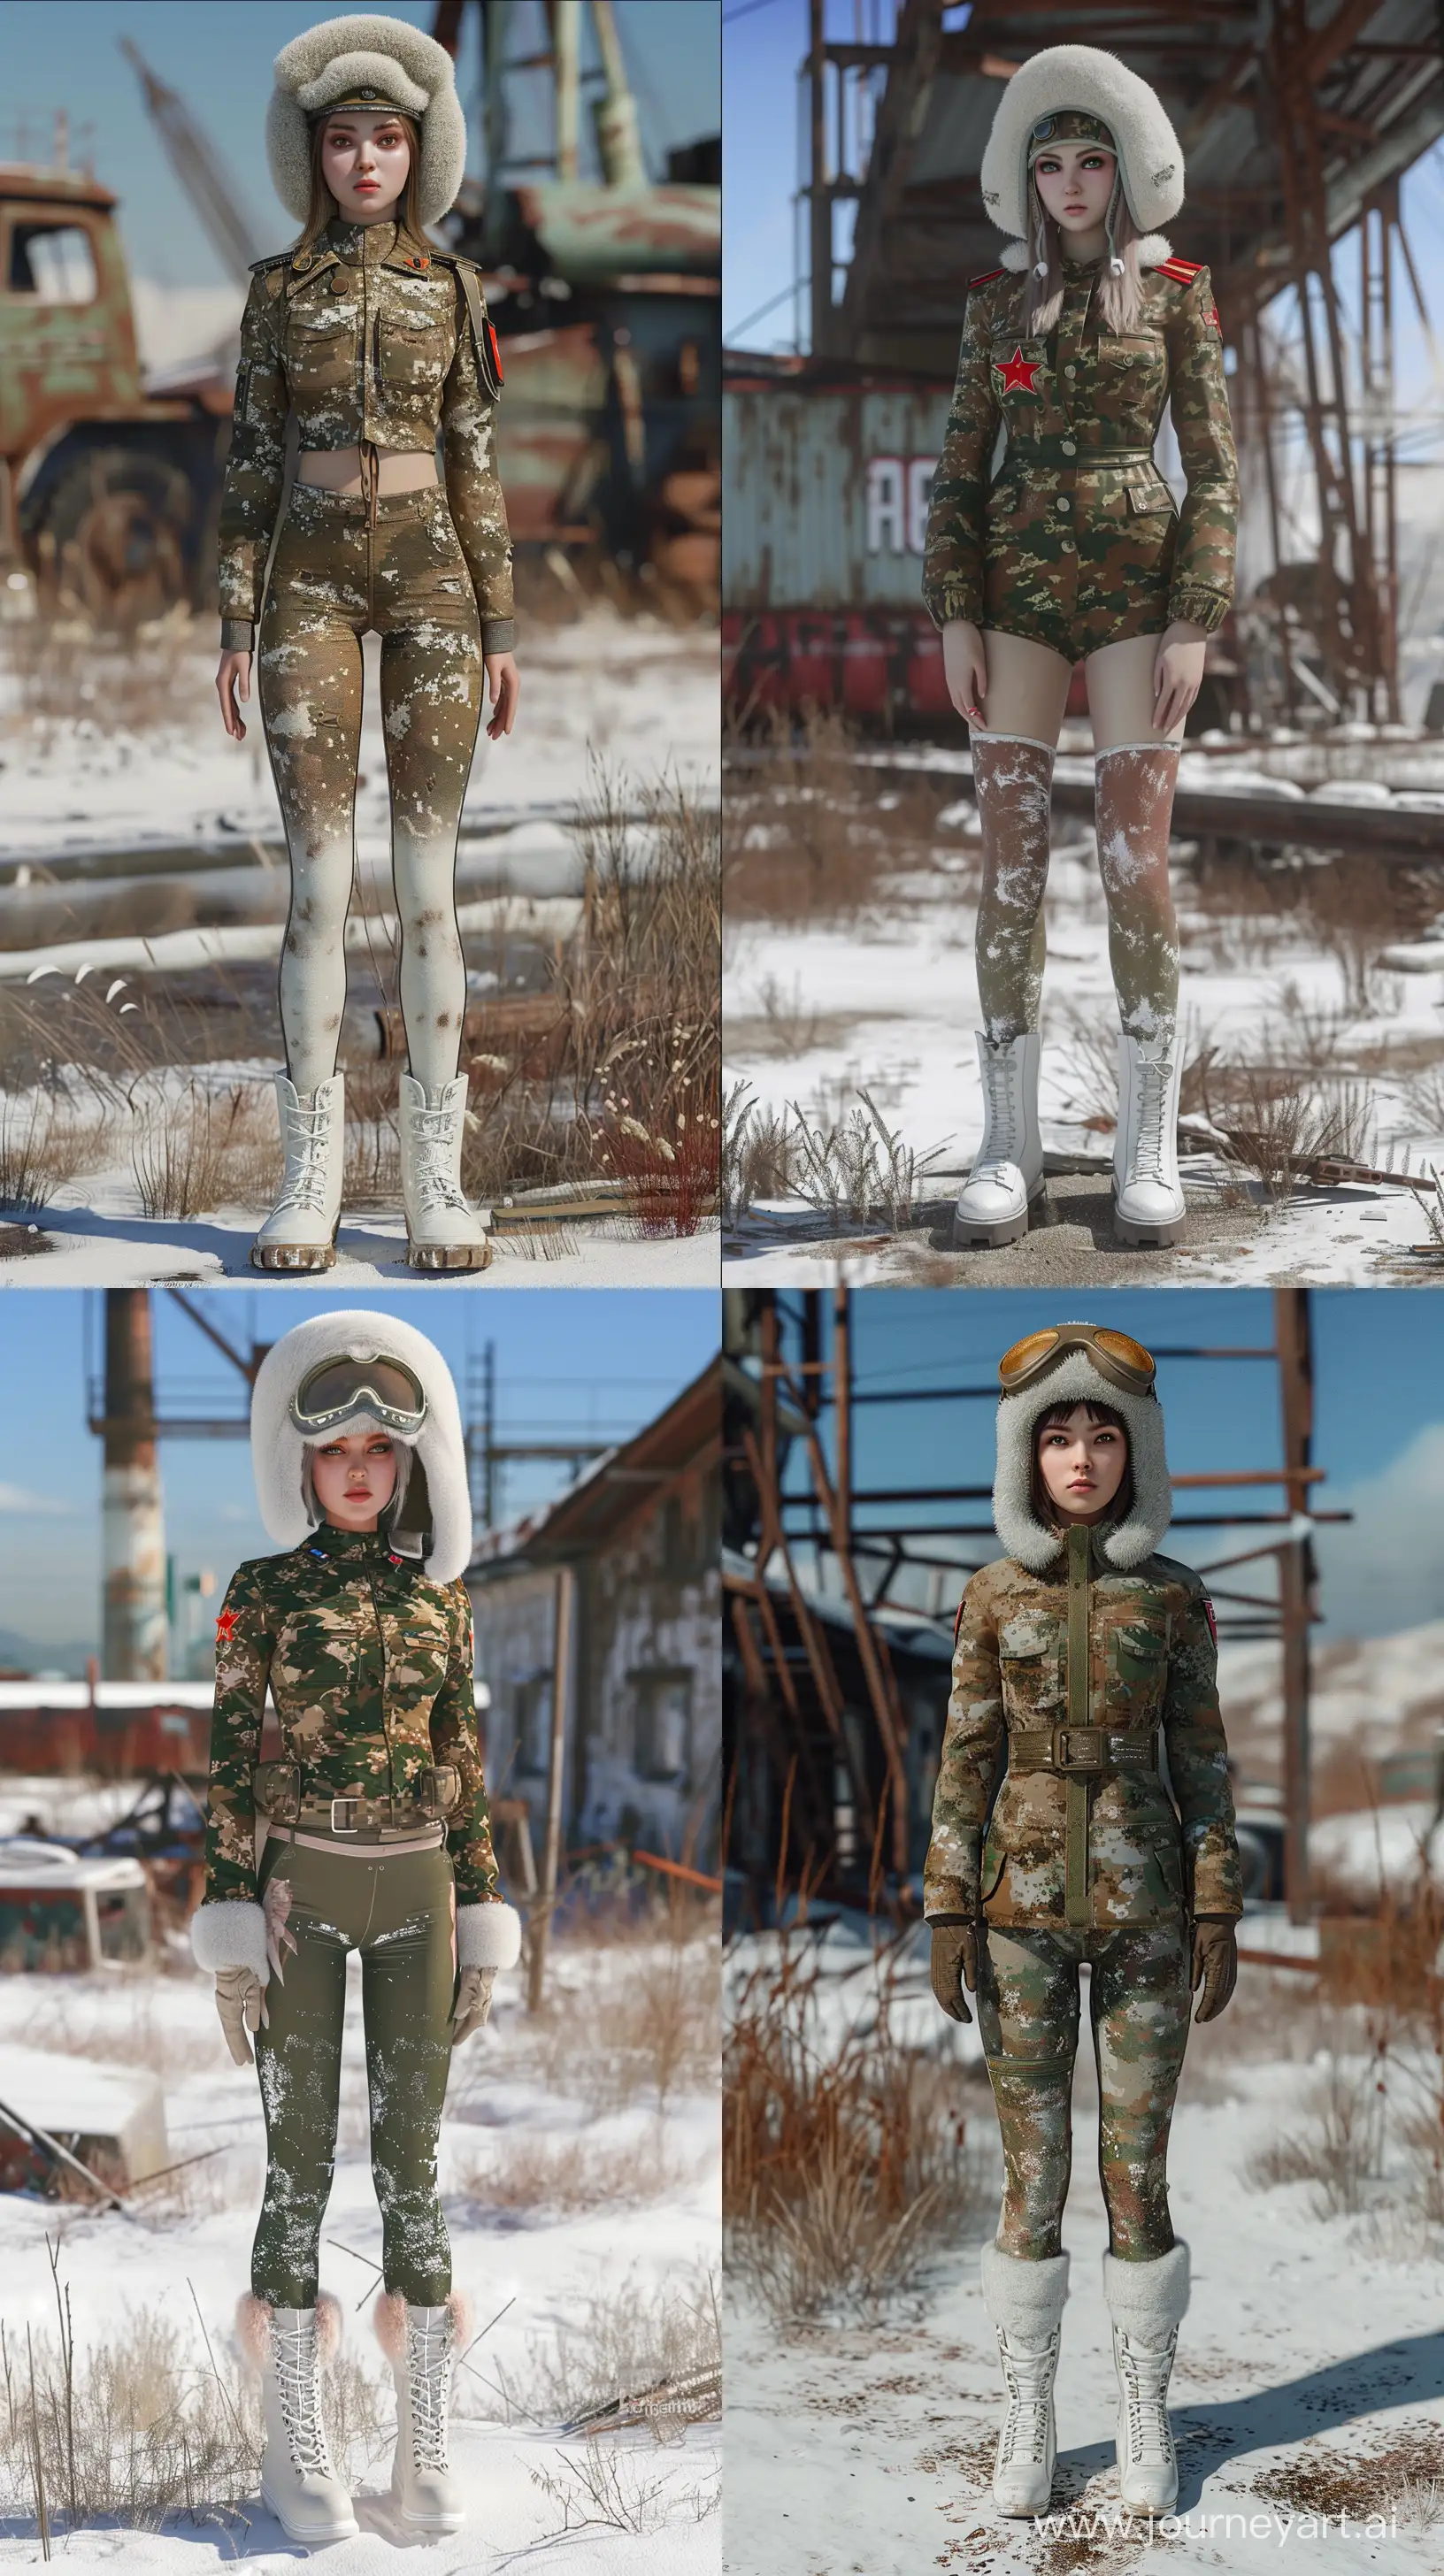 Adventurous-Tomboy-in-Communist-Snow-Camouflage-PostApocalyptic-Fashion-Statement